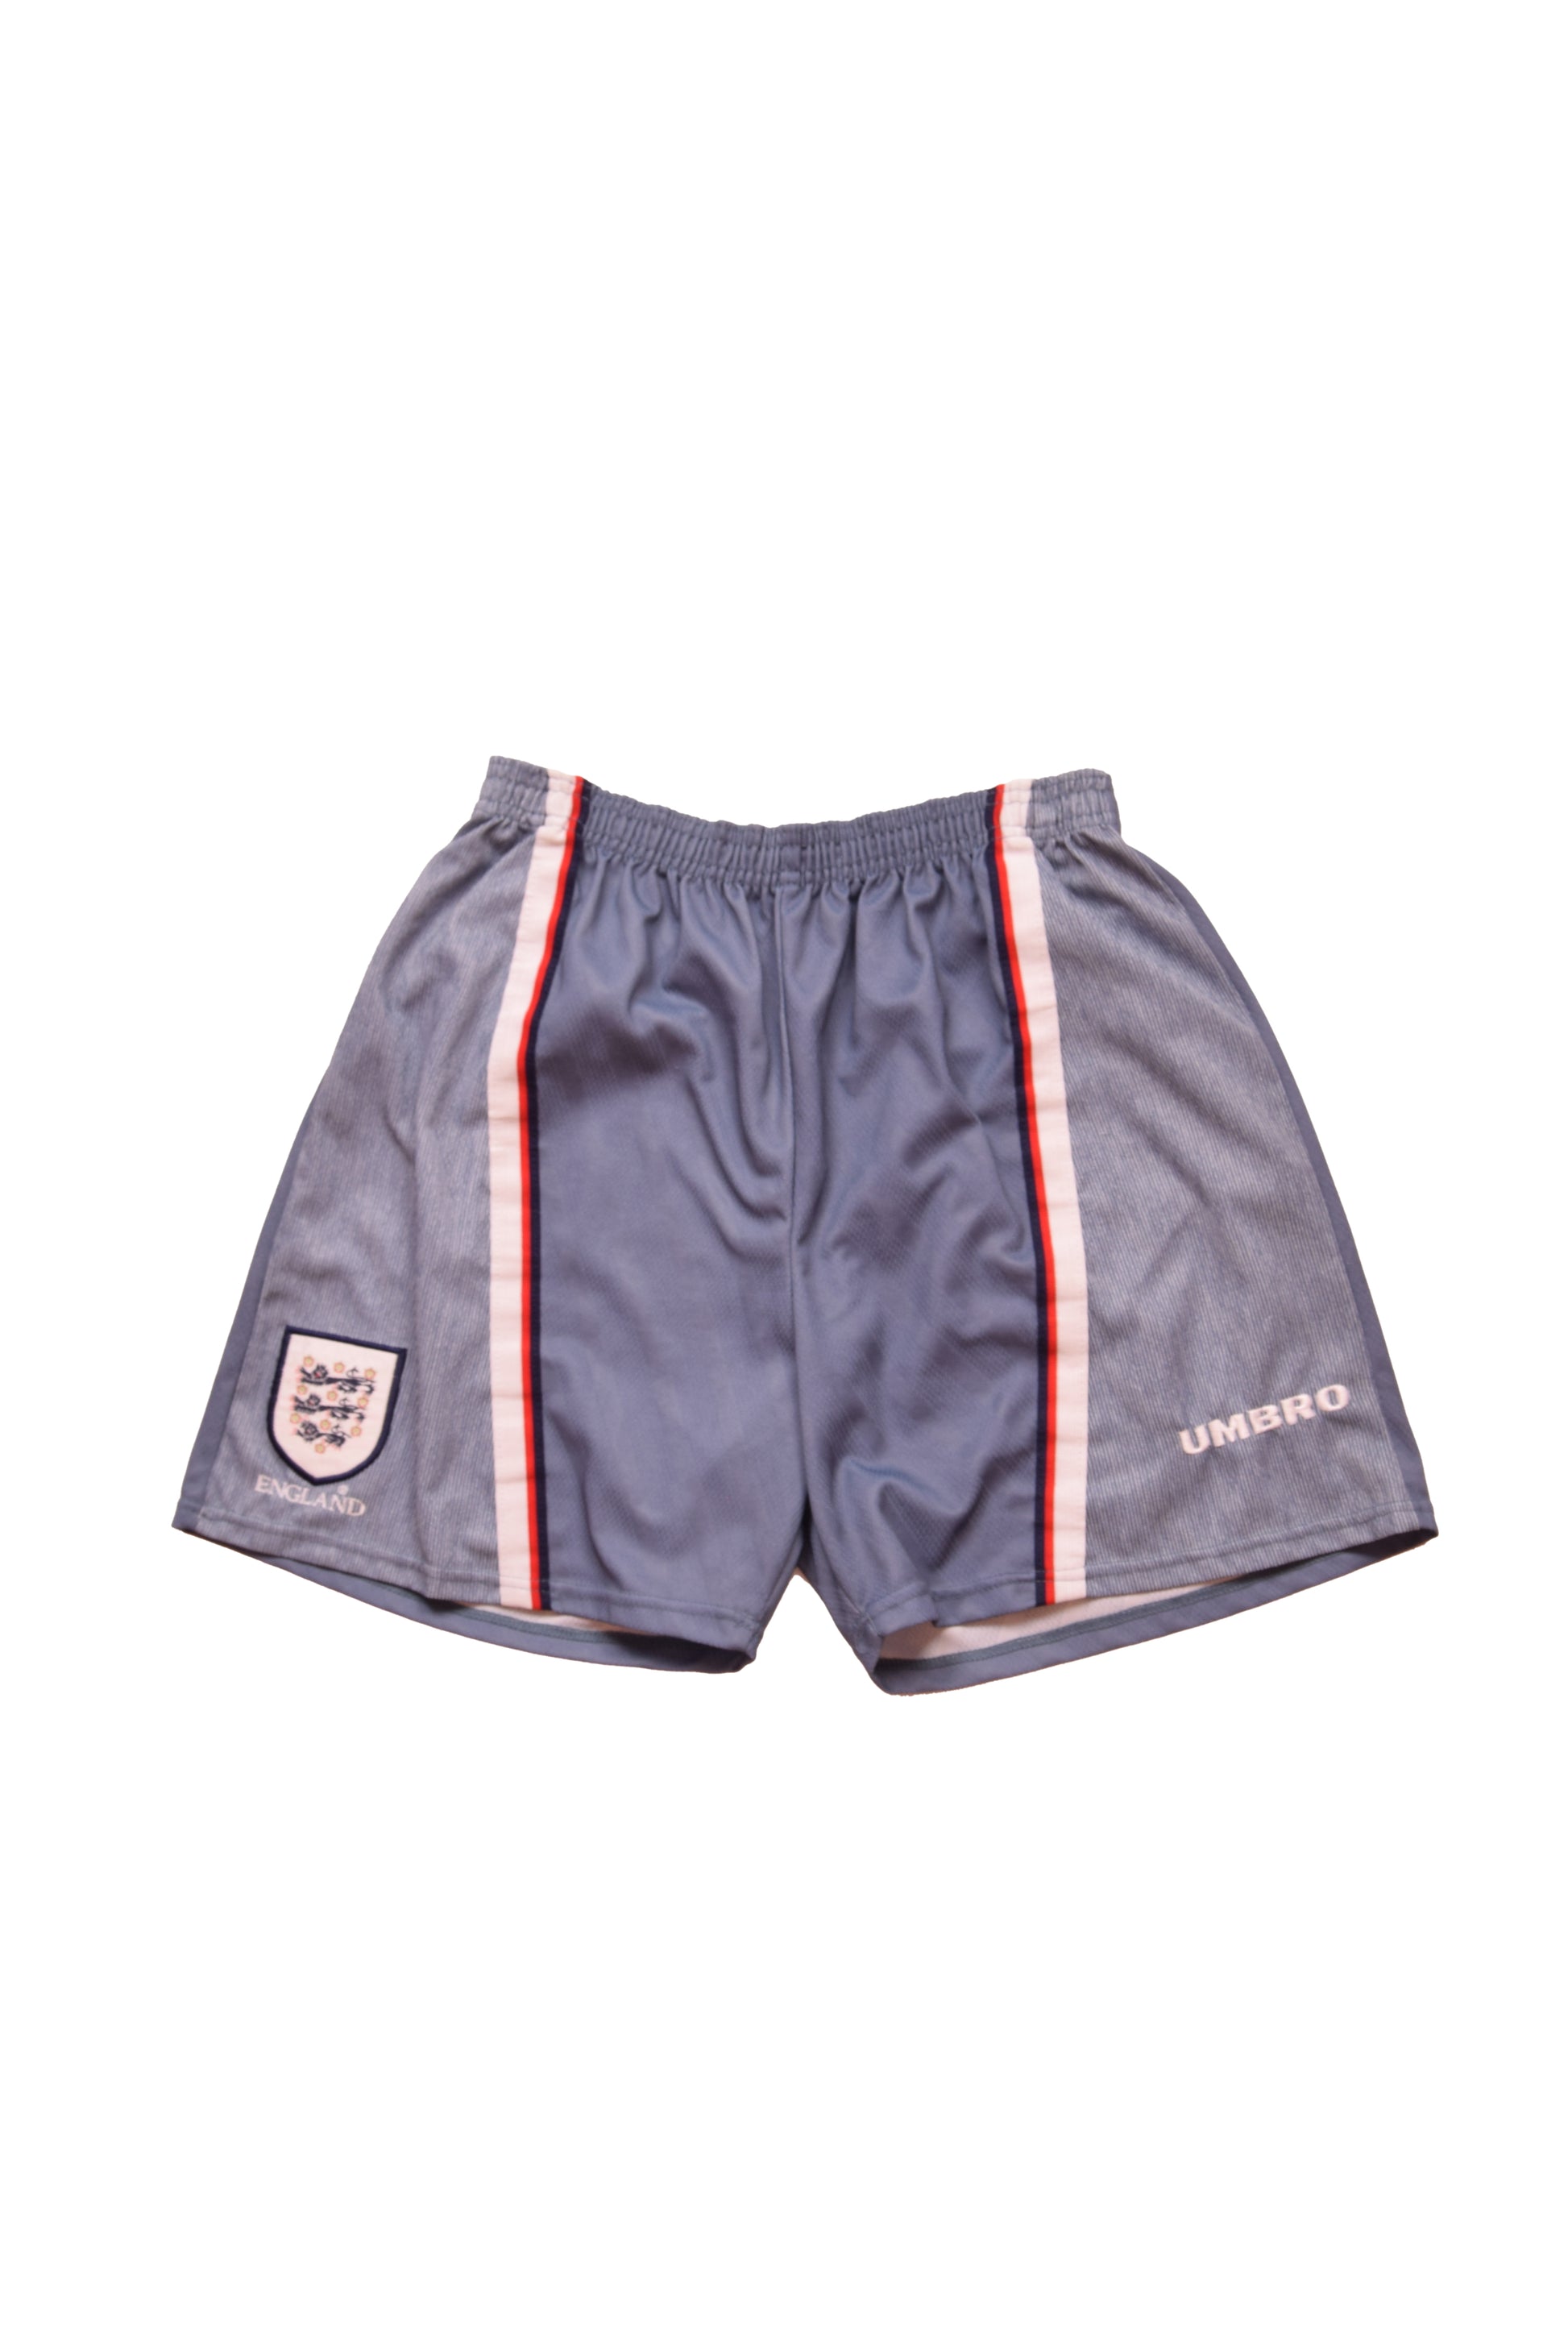 Vintage England Umbro Football Shorts Away Made in England Euro 1996